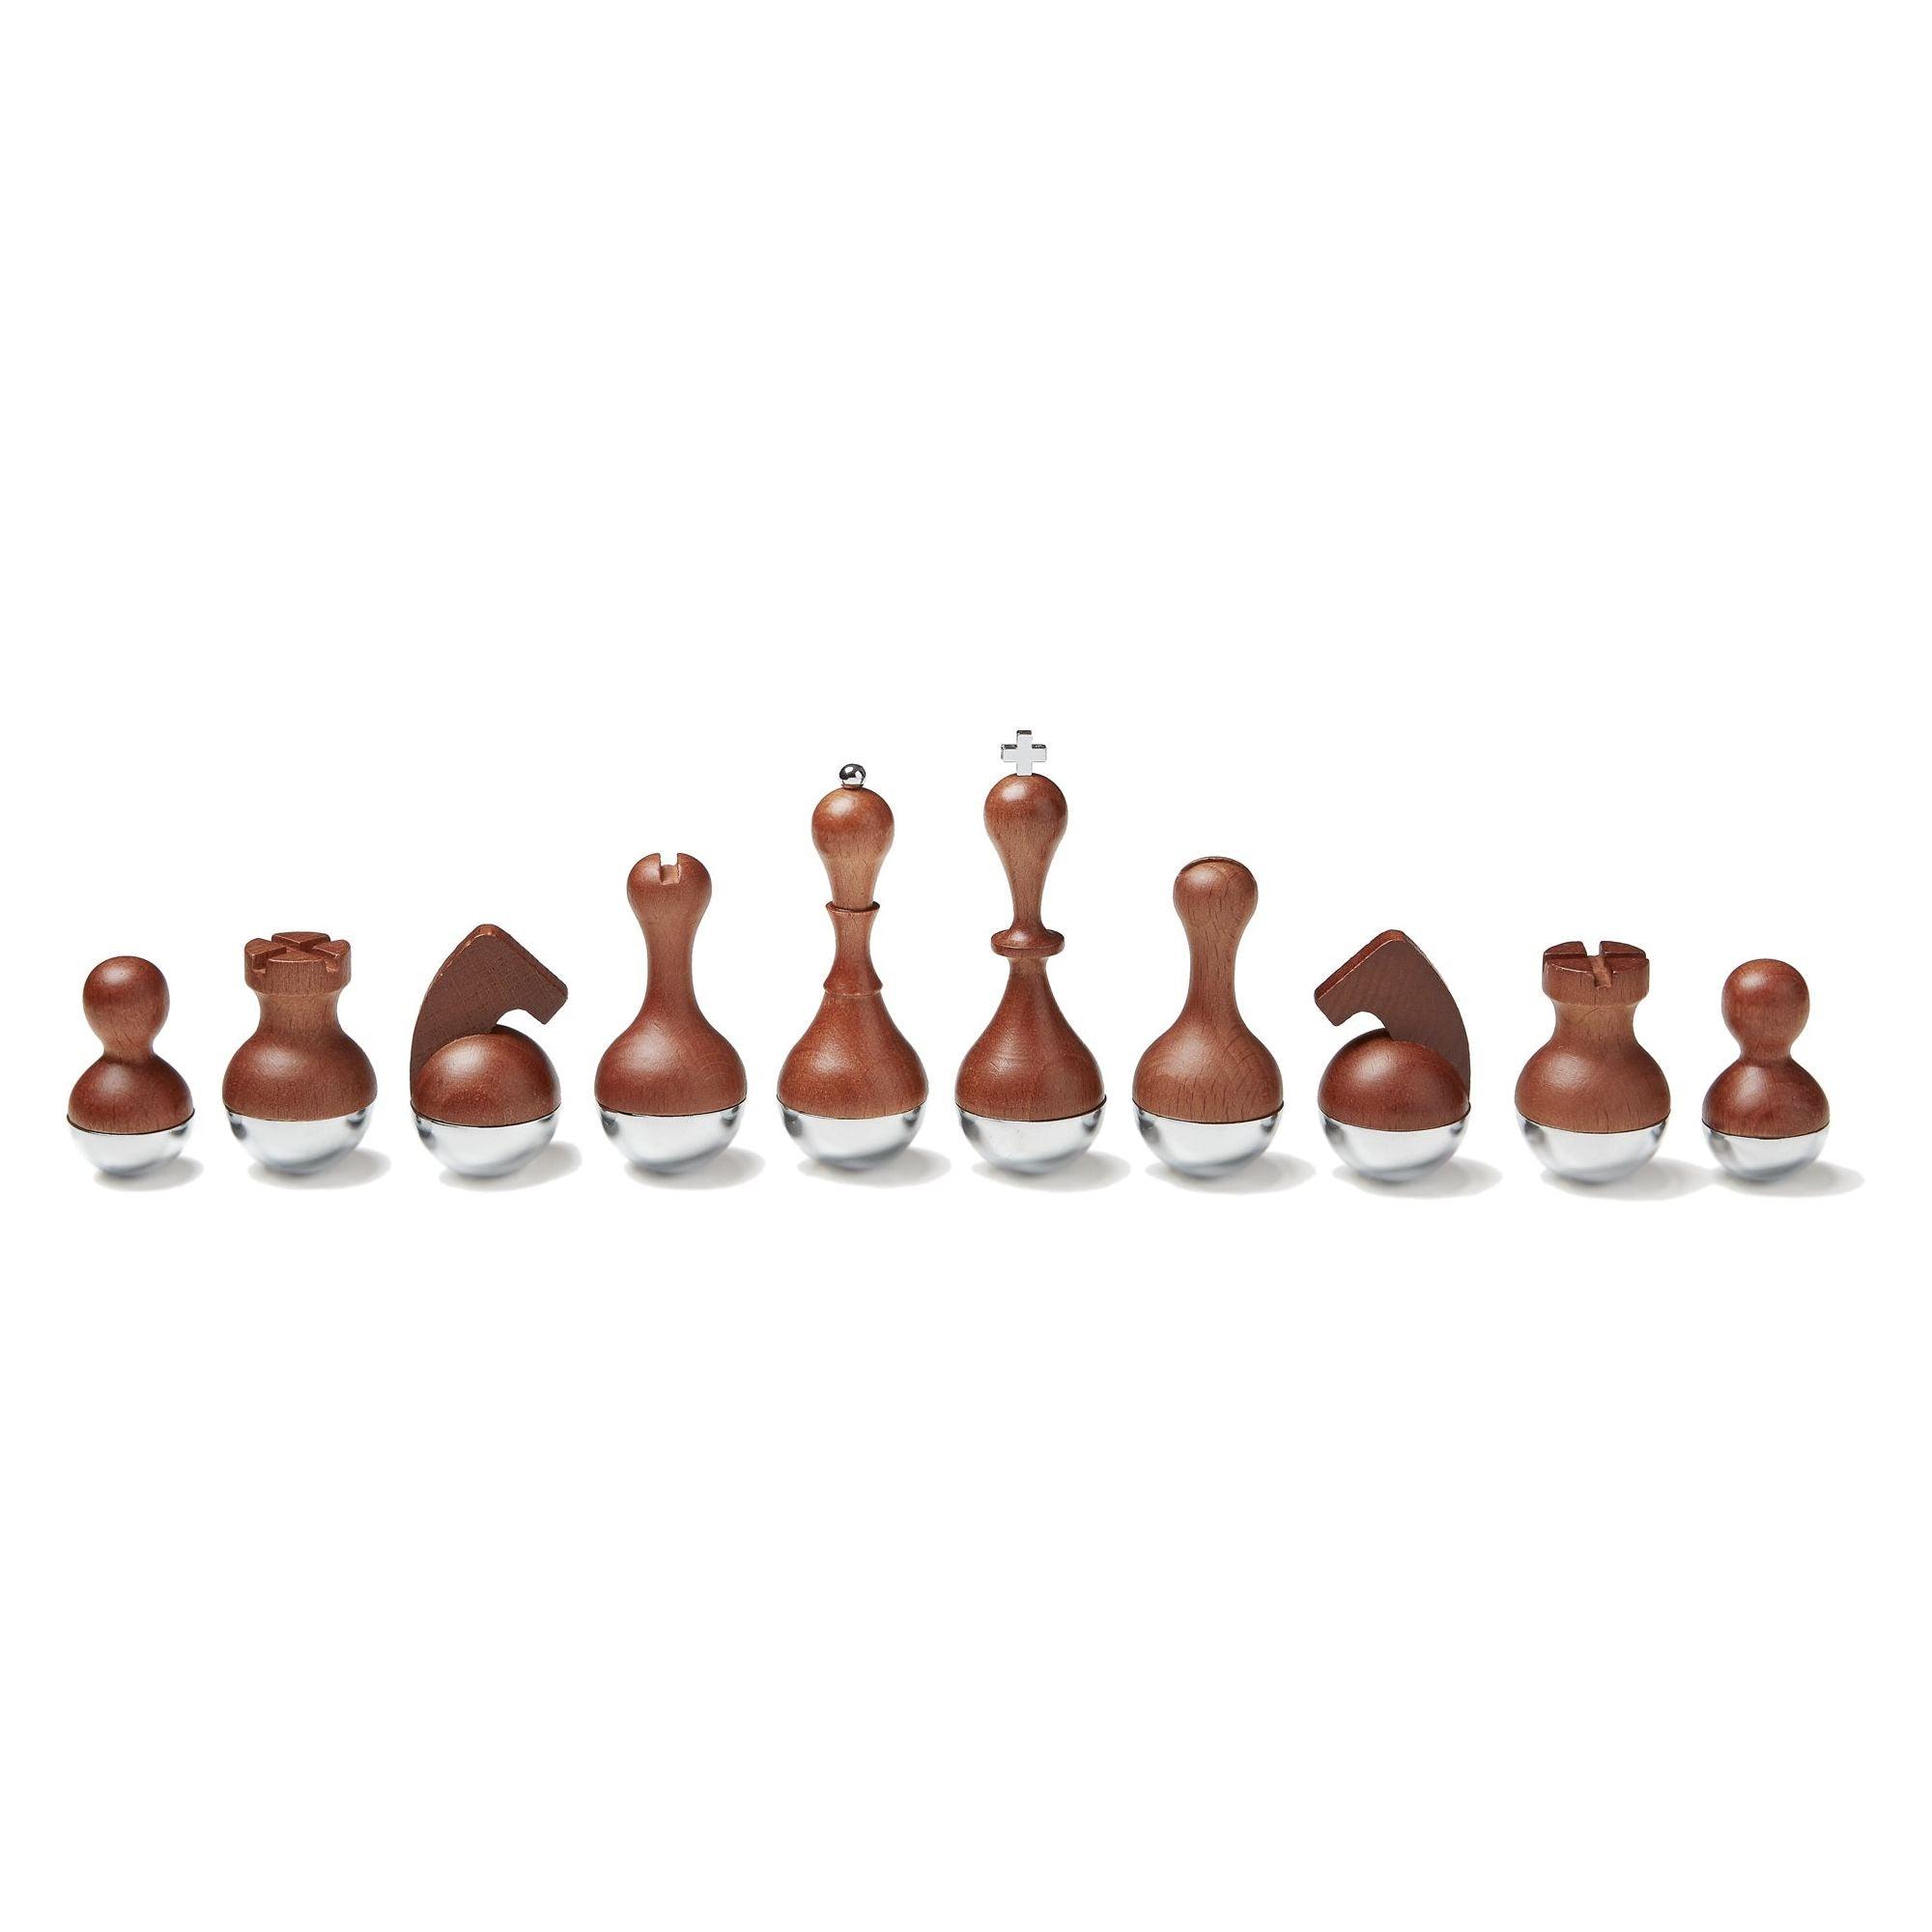 Umbra - Wobble Chess Set - Lights Canada